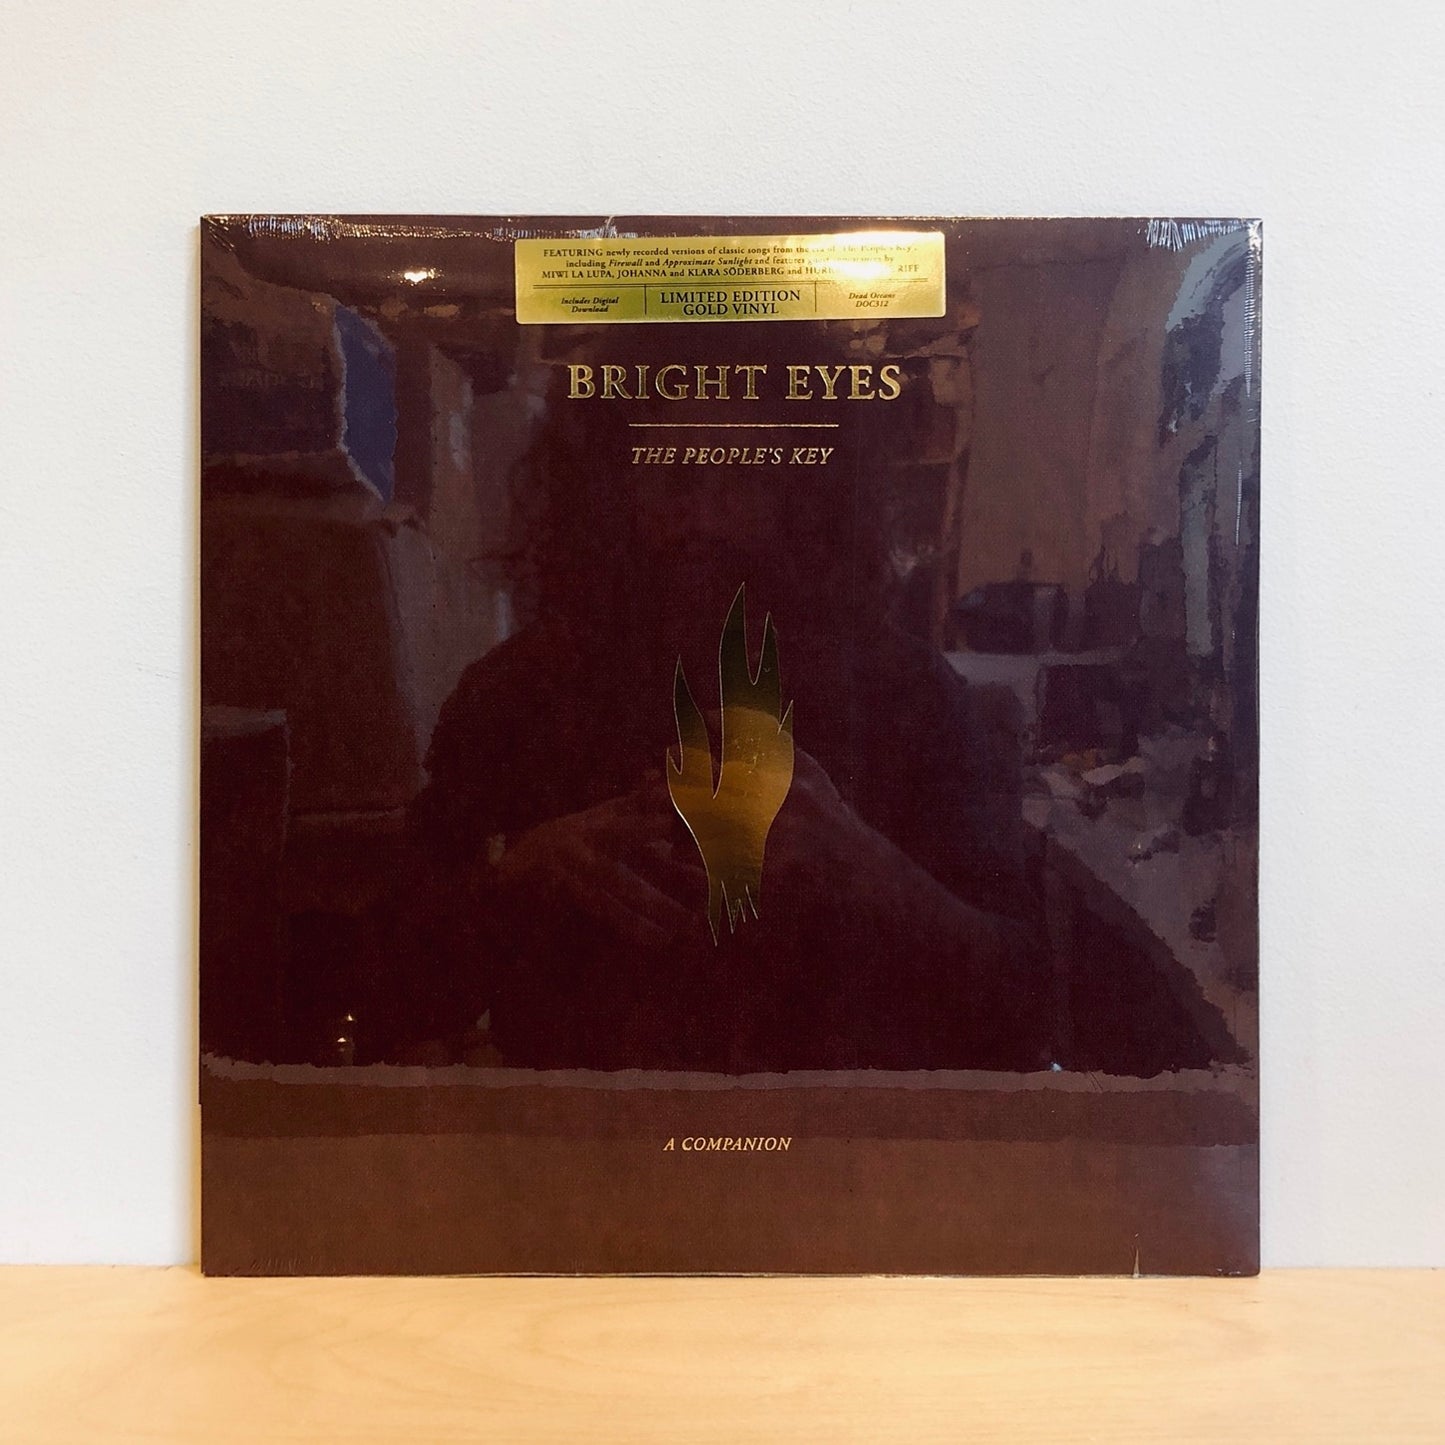 Bright Eyes - The People's Key - A Companion. LP [Ltd. Ed. Gold Vinyl]